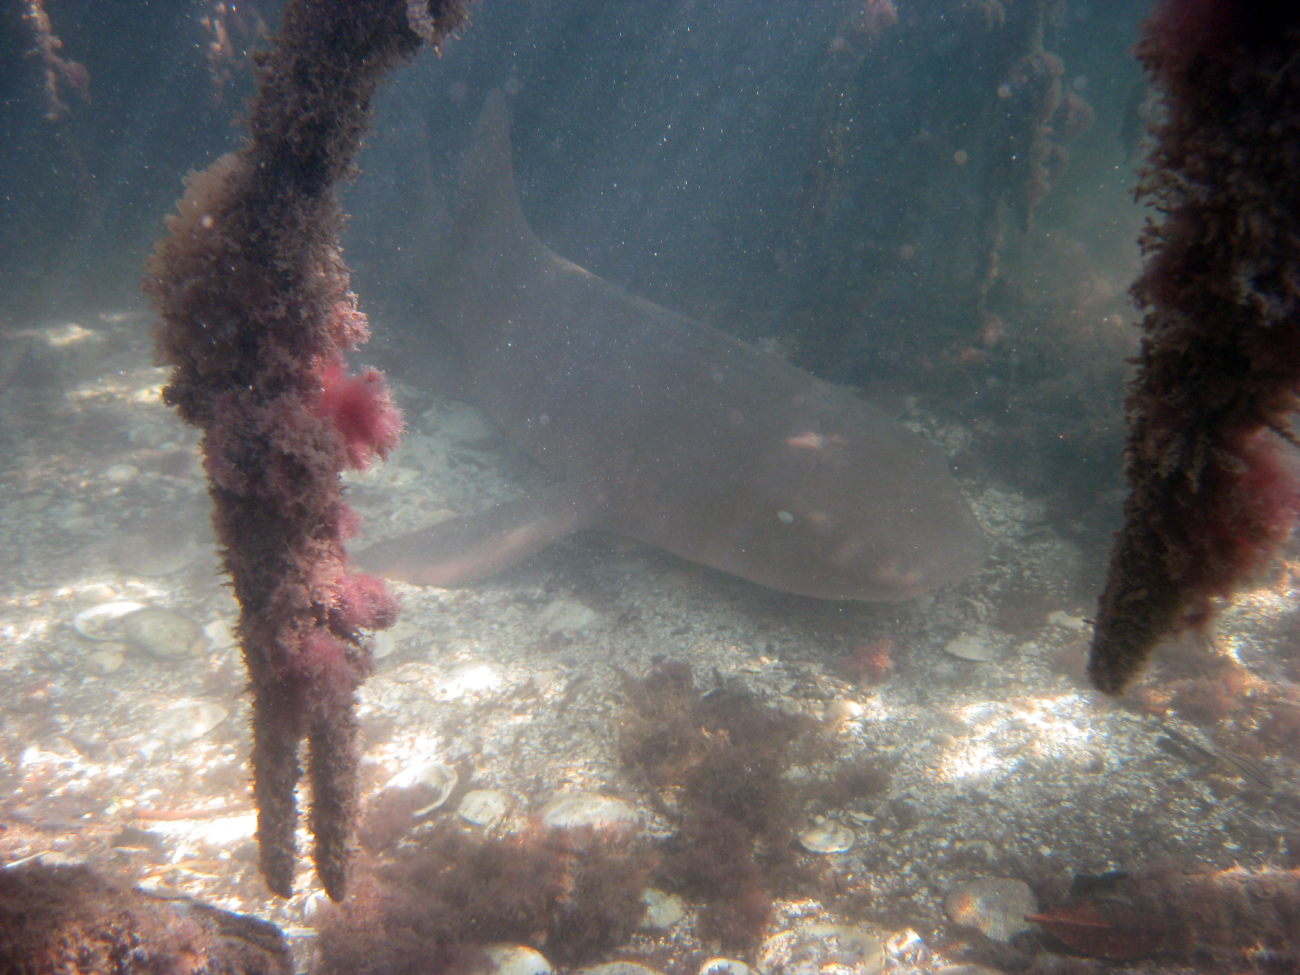 Nurse shark (Ginglymostoma cirratum) in the midst of mangrove prop roots(Rhizophora rts